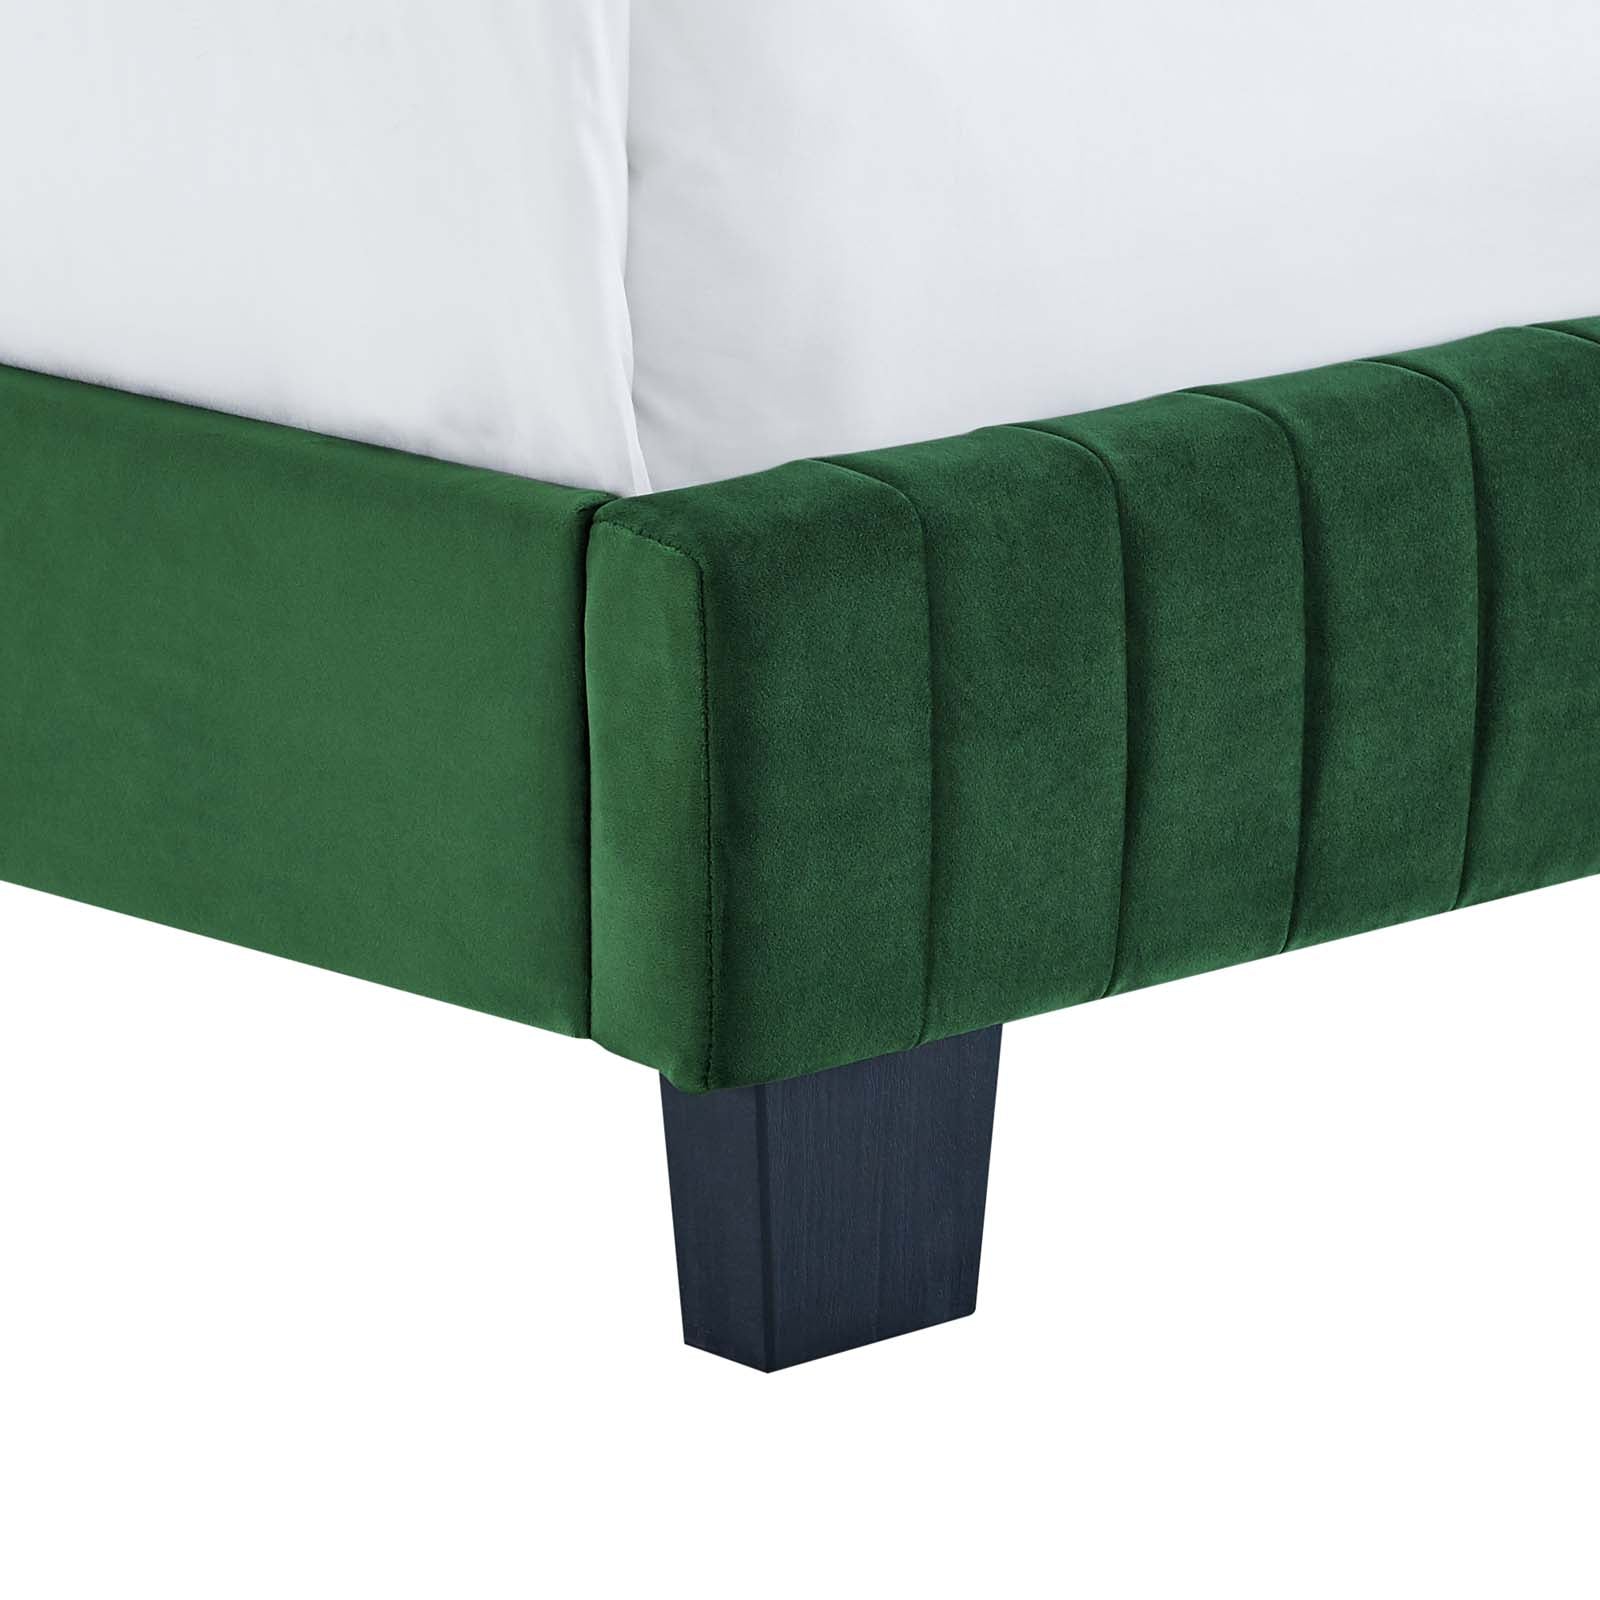 Modway Beds - Celine Channel Tufted Performance Velvet Full Bed Emerald